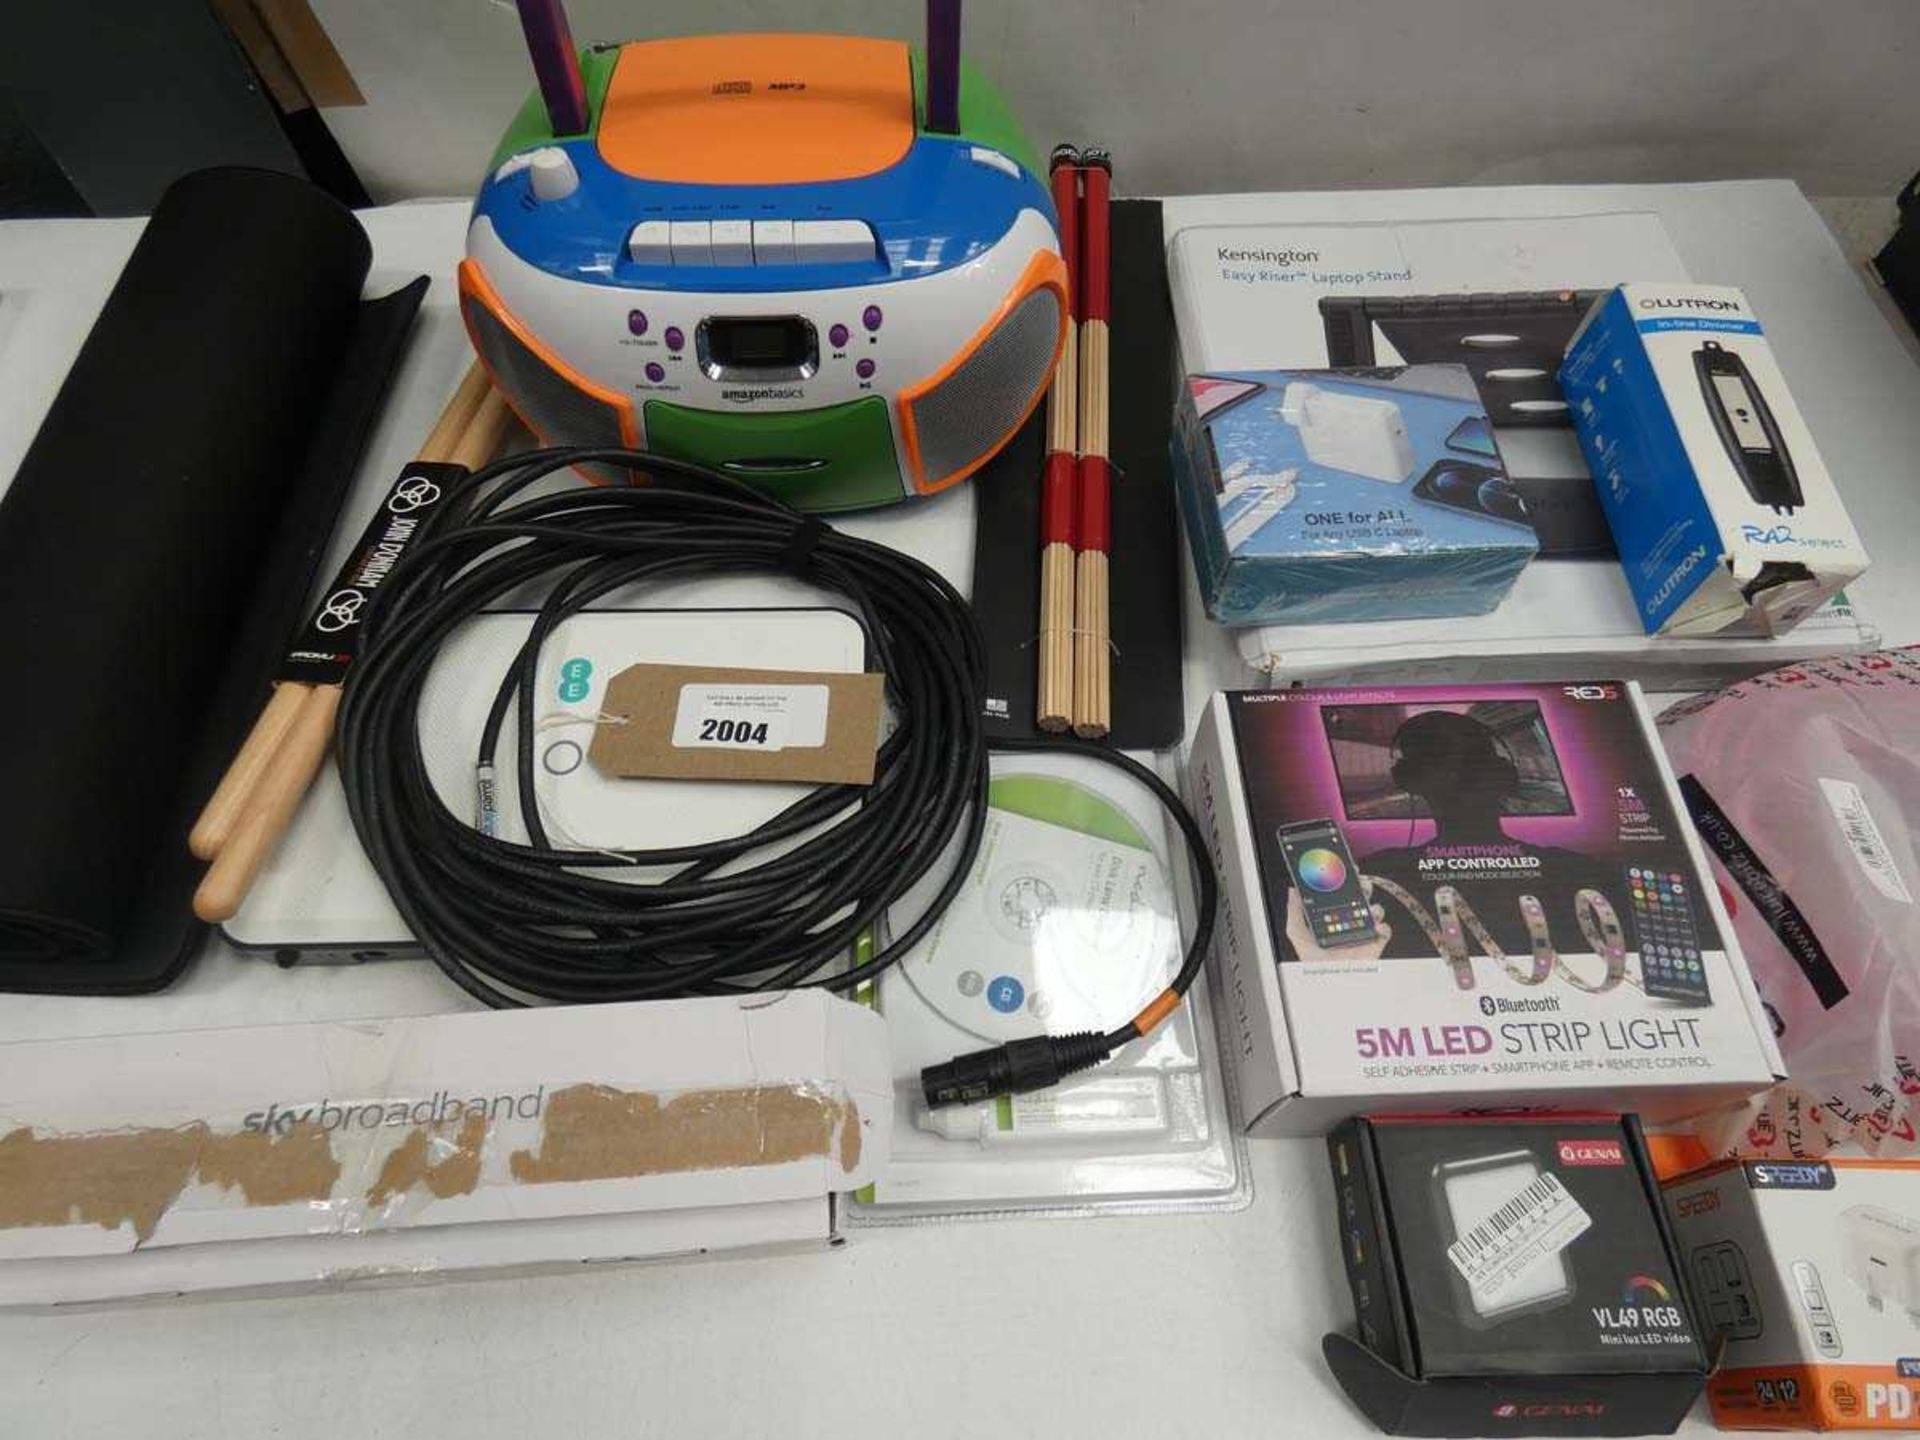 +VAT Mixed lot containing gaming mouse mat, strip lights, AmazonBasics CD player, laptop stand,